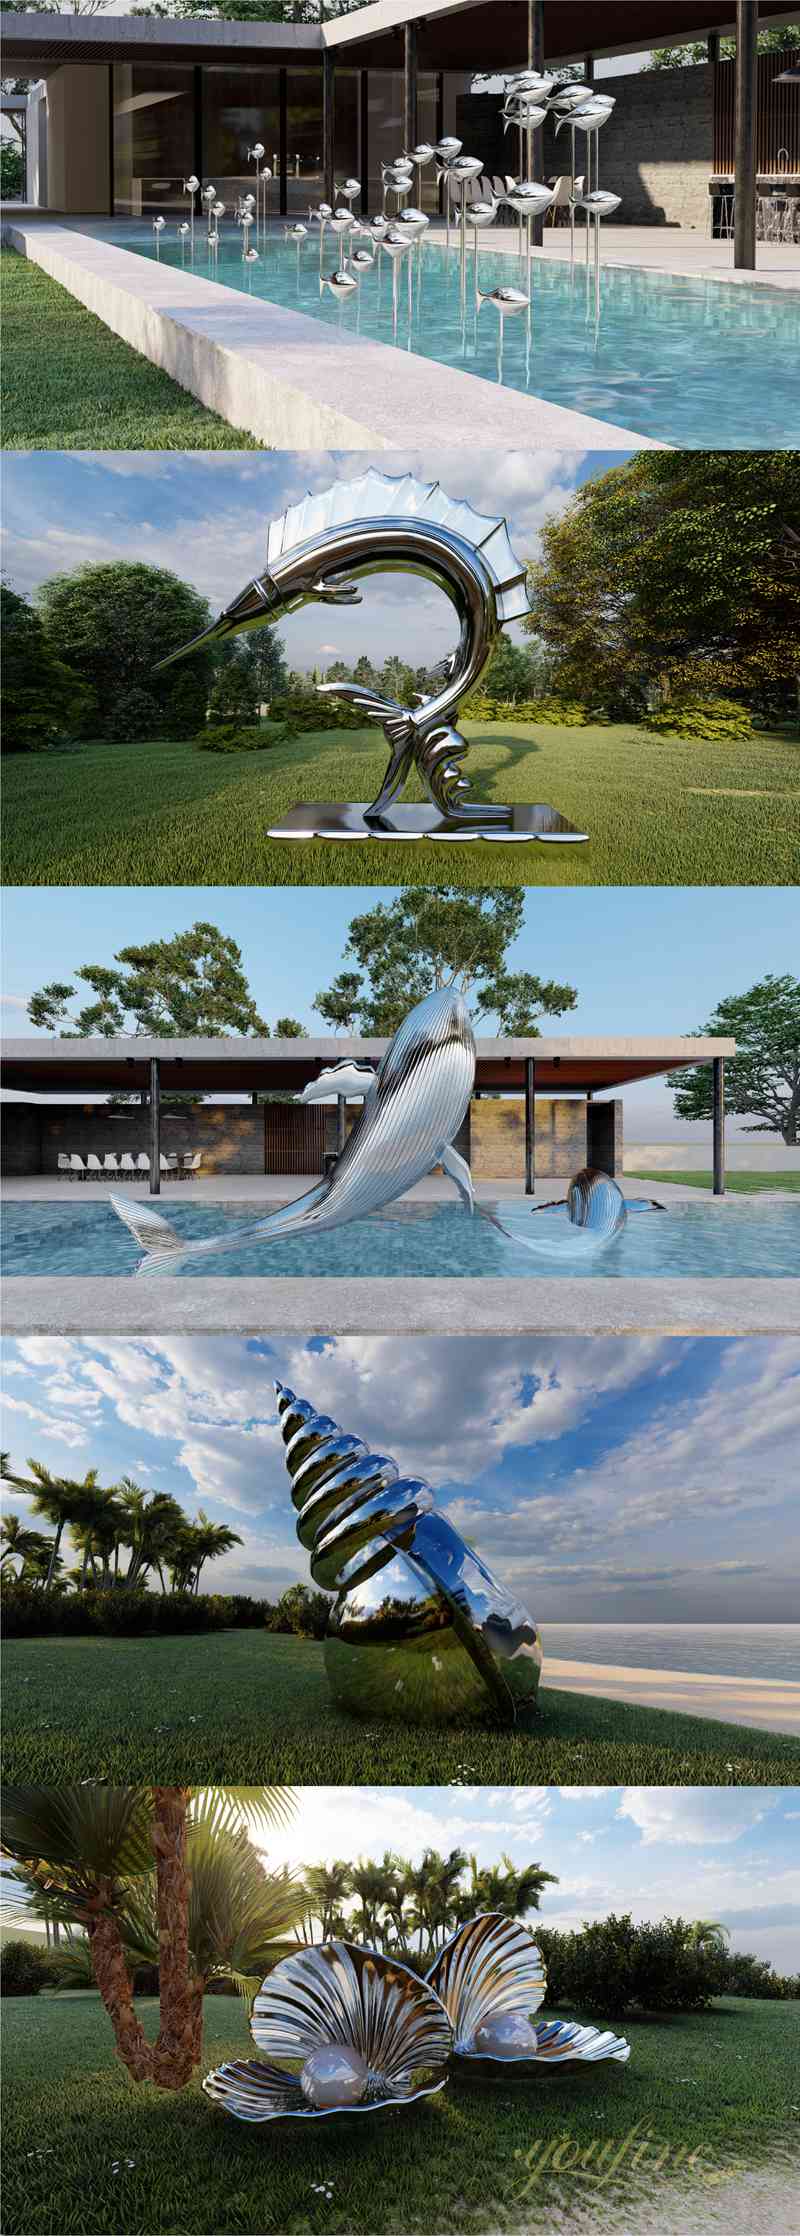 Spectacular Stainless Steel Fish Sculpture for Yard CSS-995 - Garden Metal Sculpture - 14